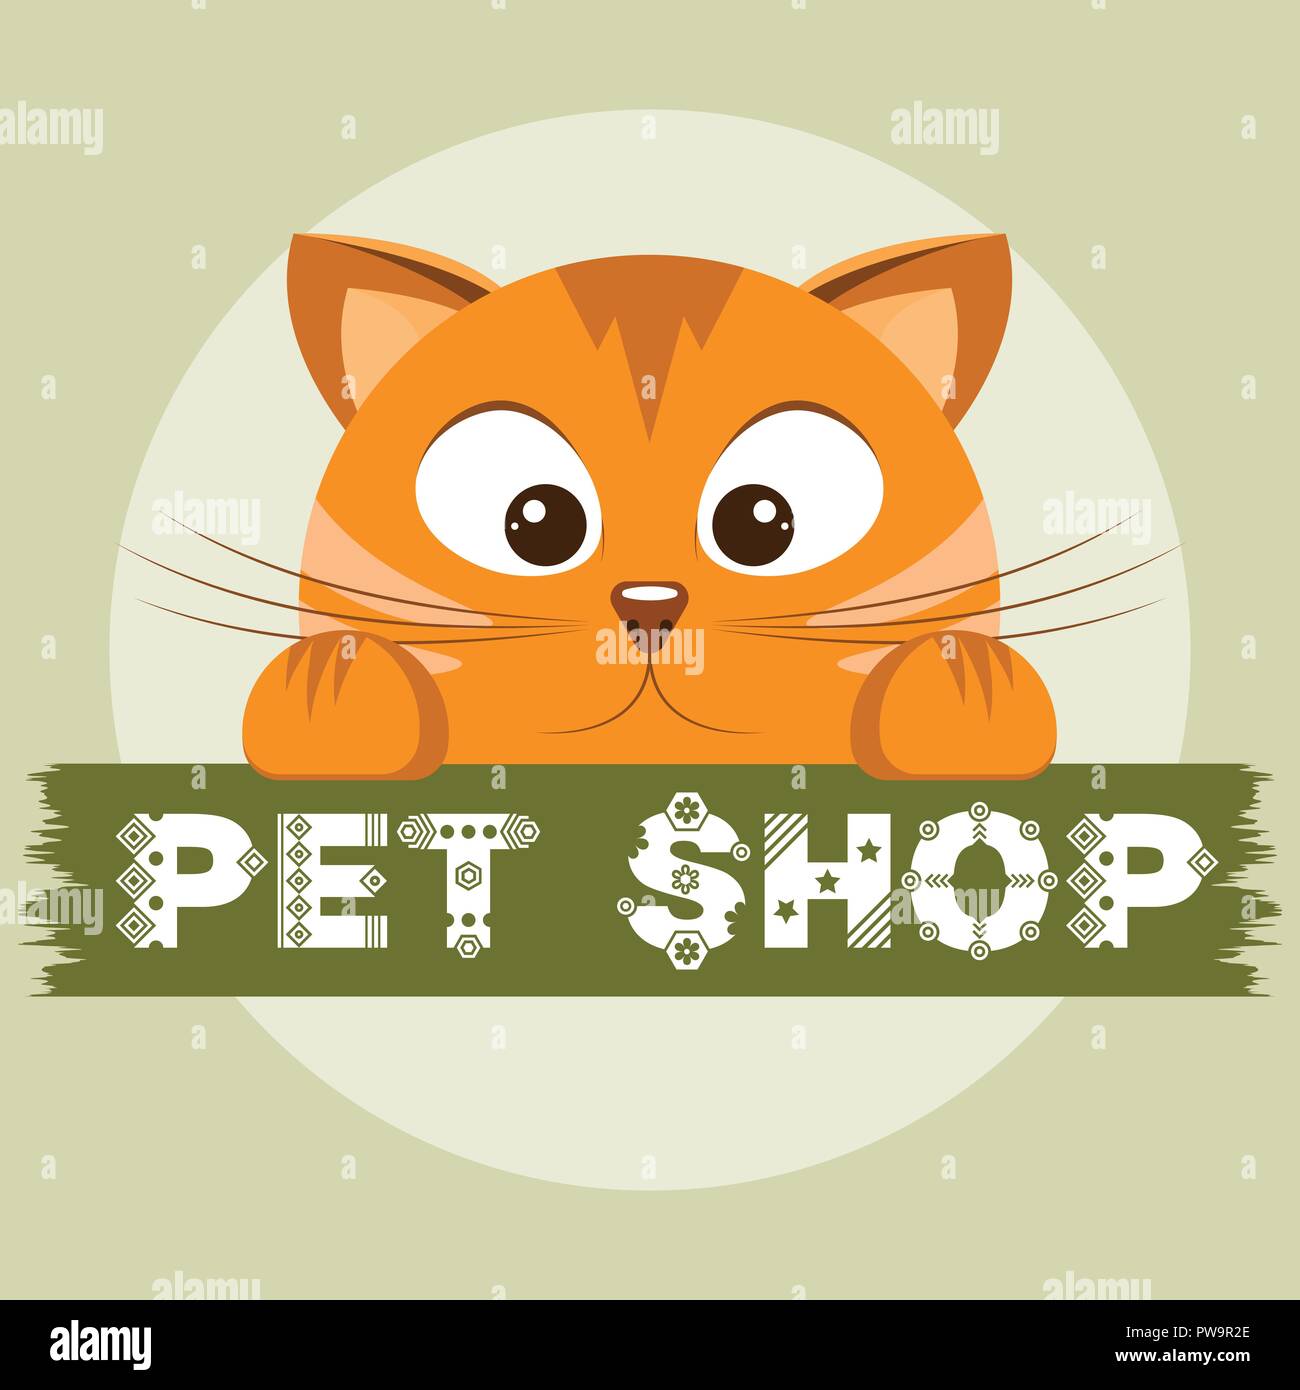 Pet shop emblem. Orange cat on animal store banner Stock Vector